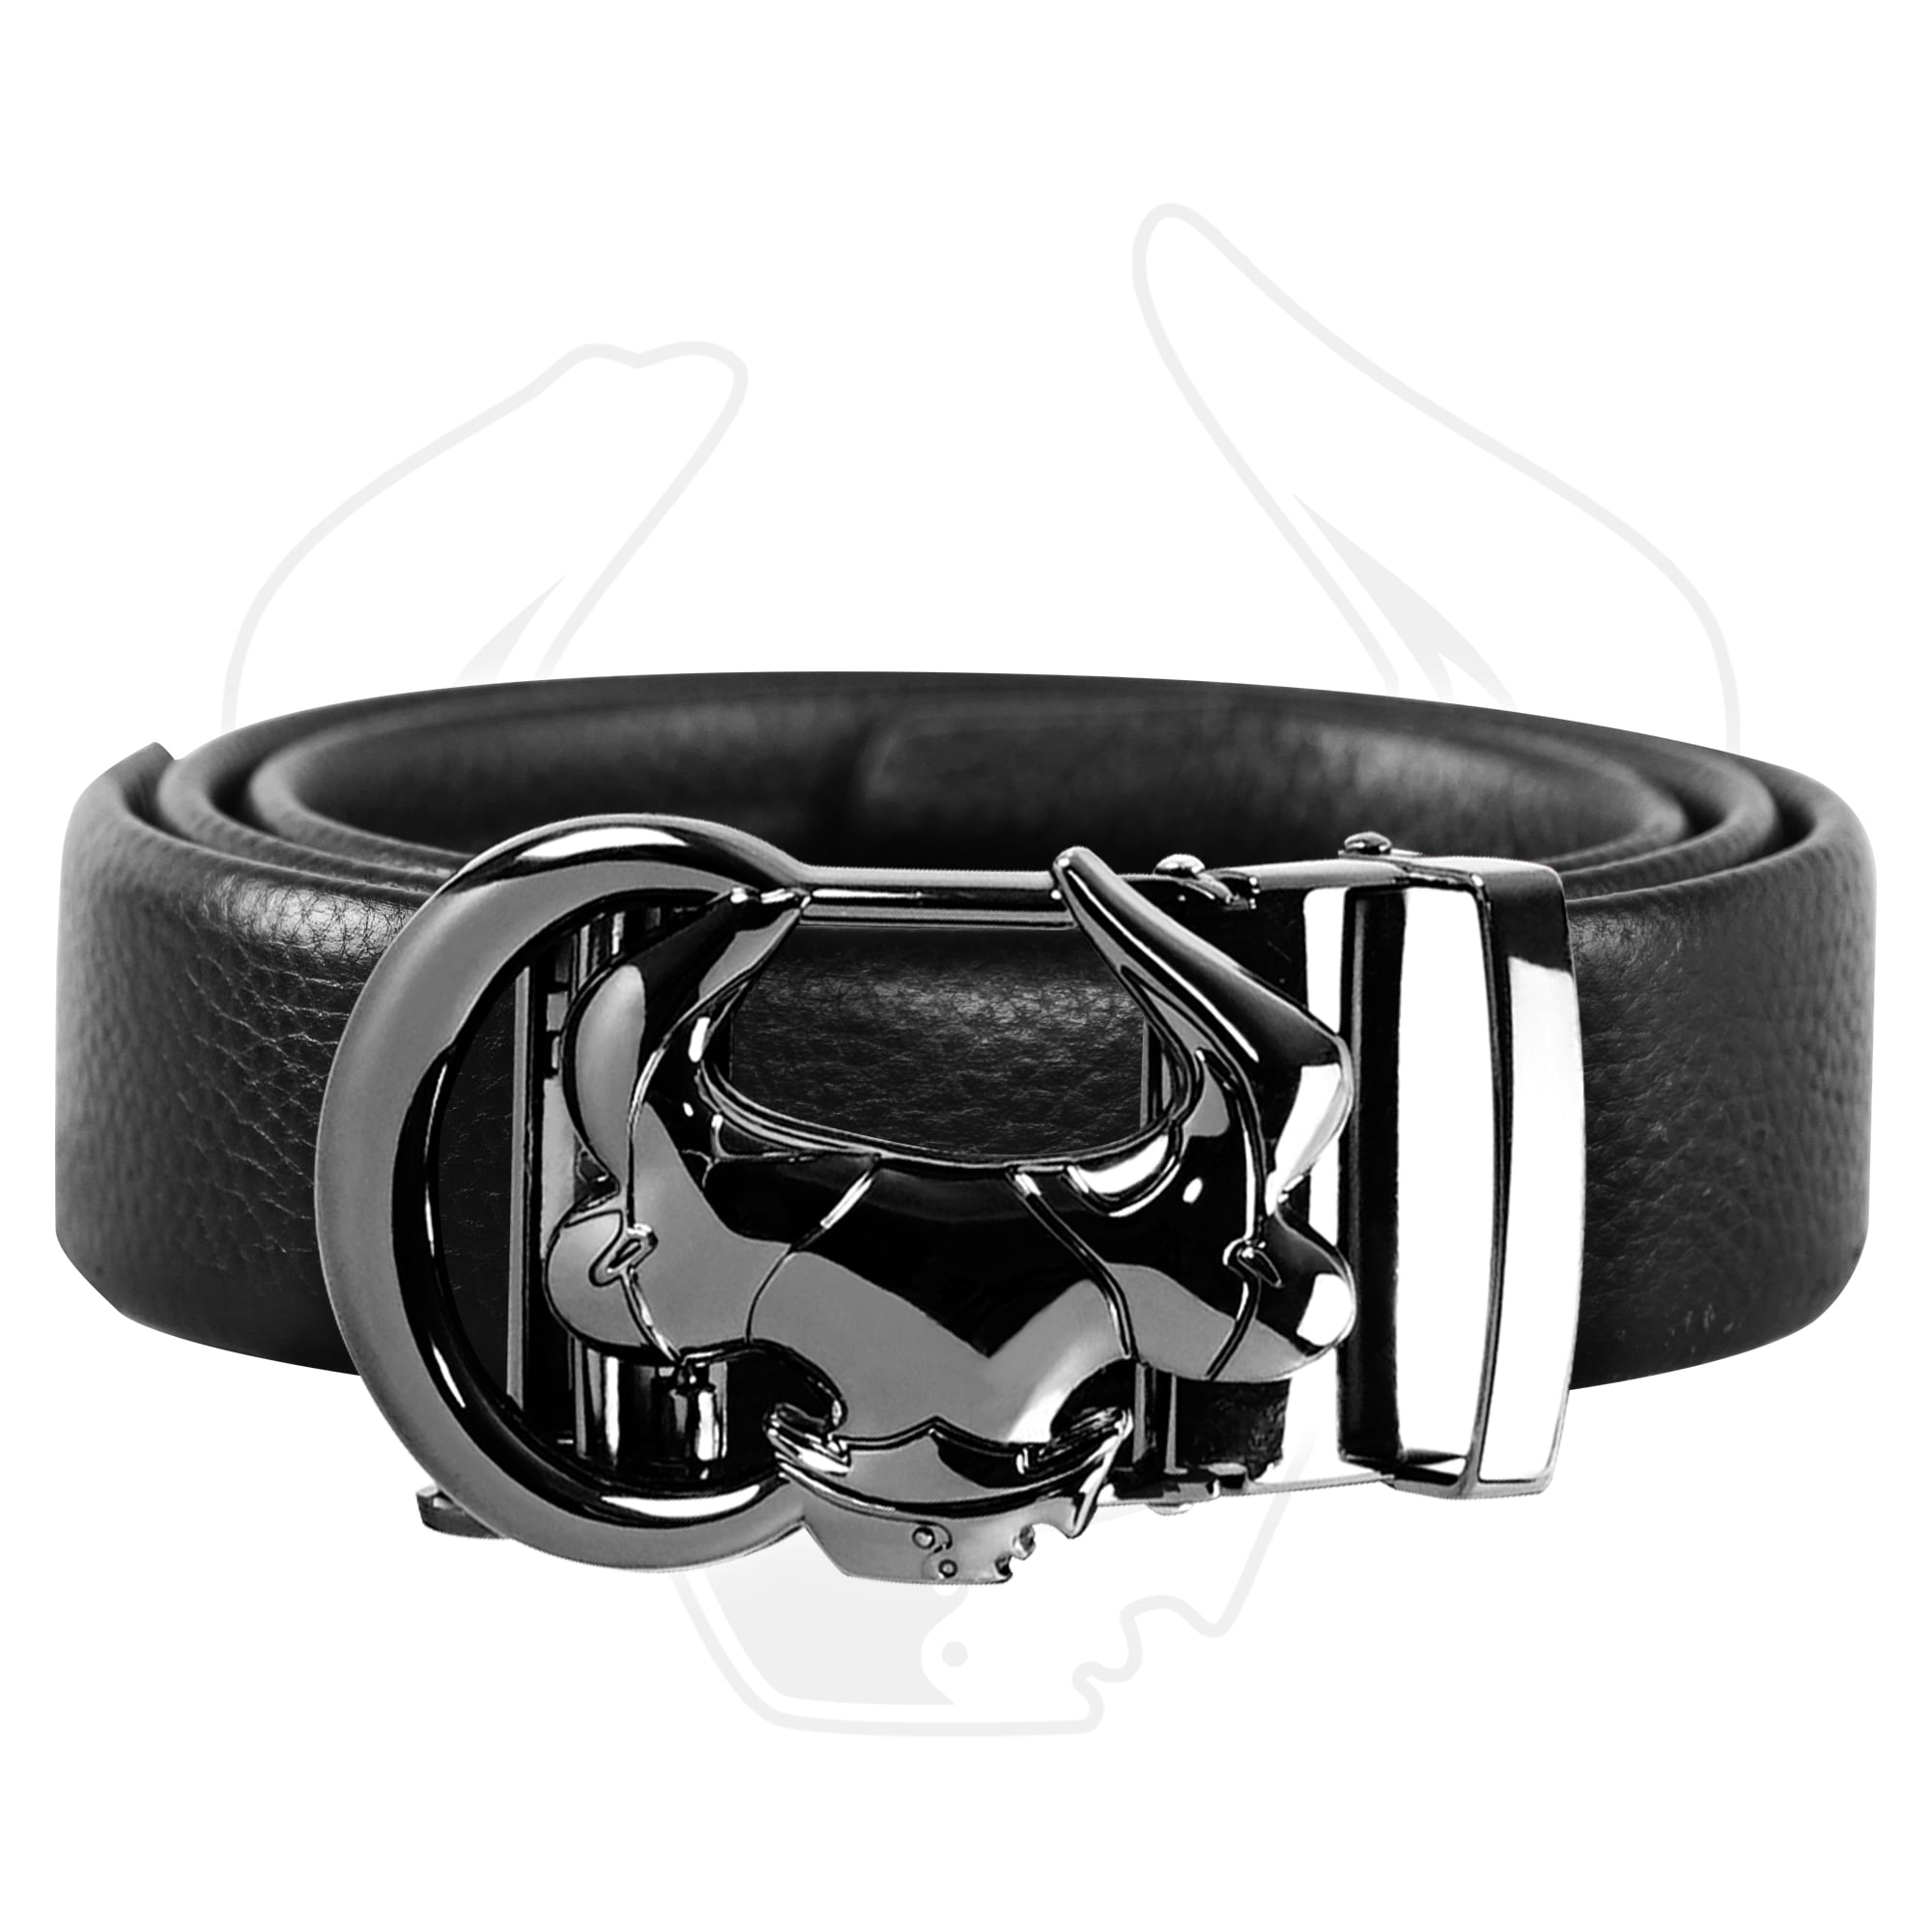 Men's Genuine Leather Ratchet Belt with Adjustable Sliding Buckle by M –  Coipdfty